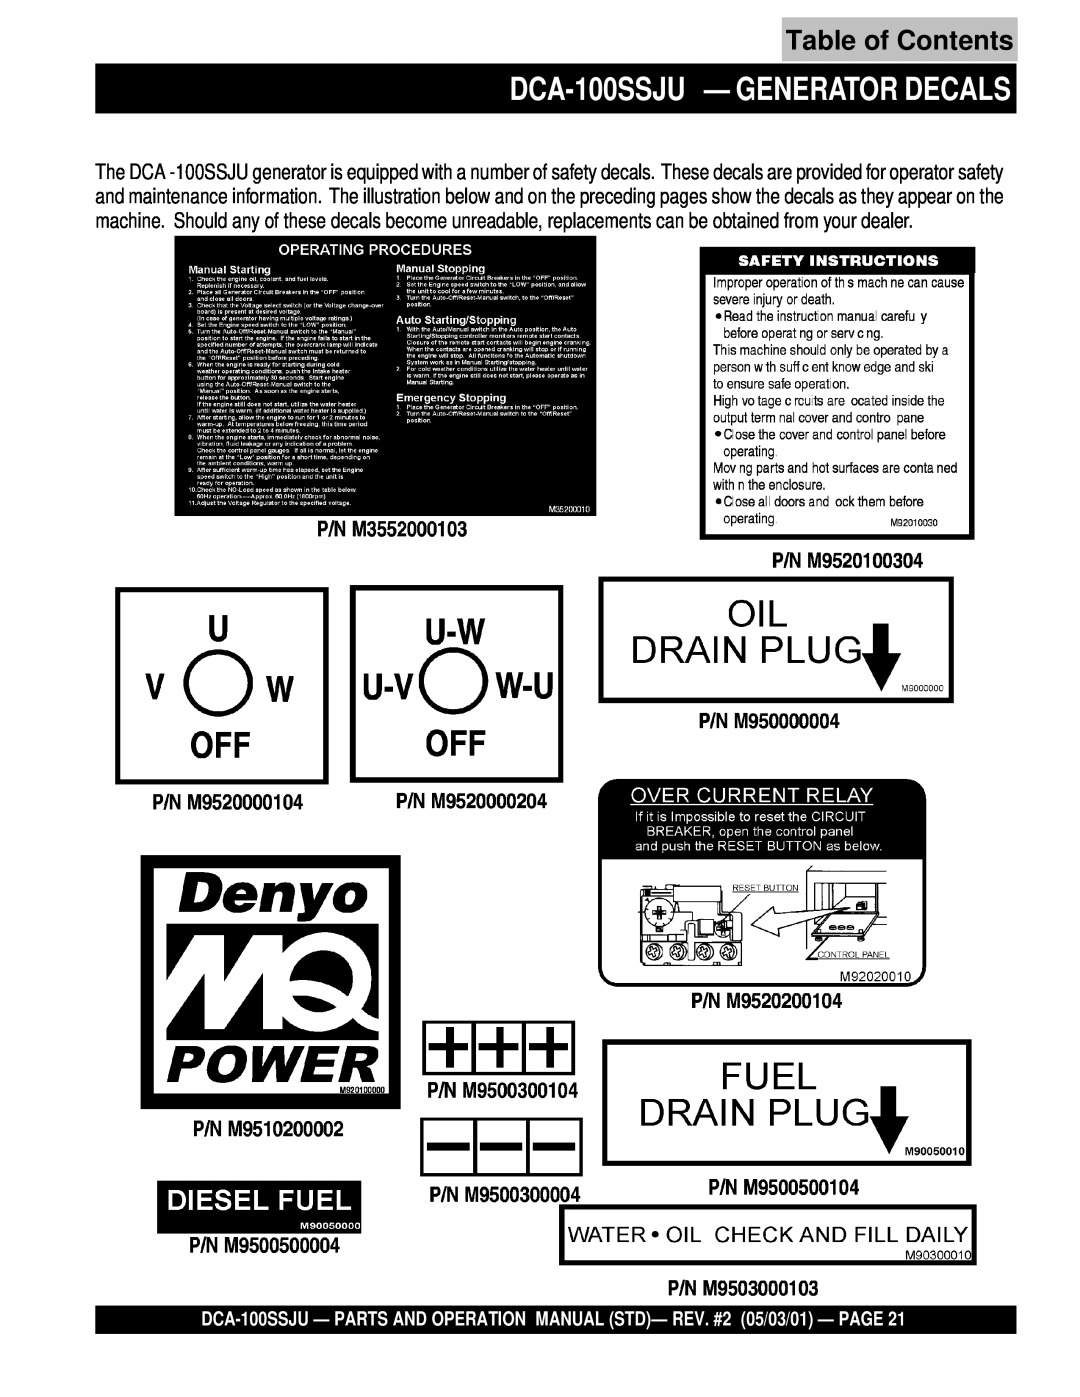 Multiquip operation manual DCA-100SSJU— GENERATOR DECALS, Table of Contents 